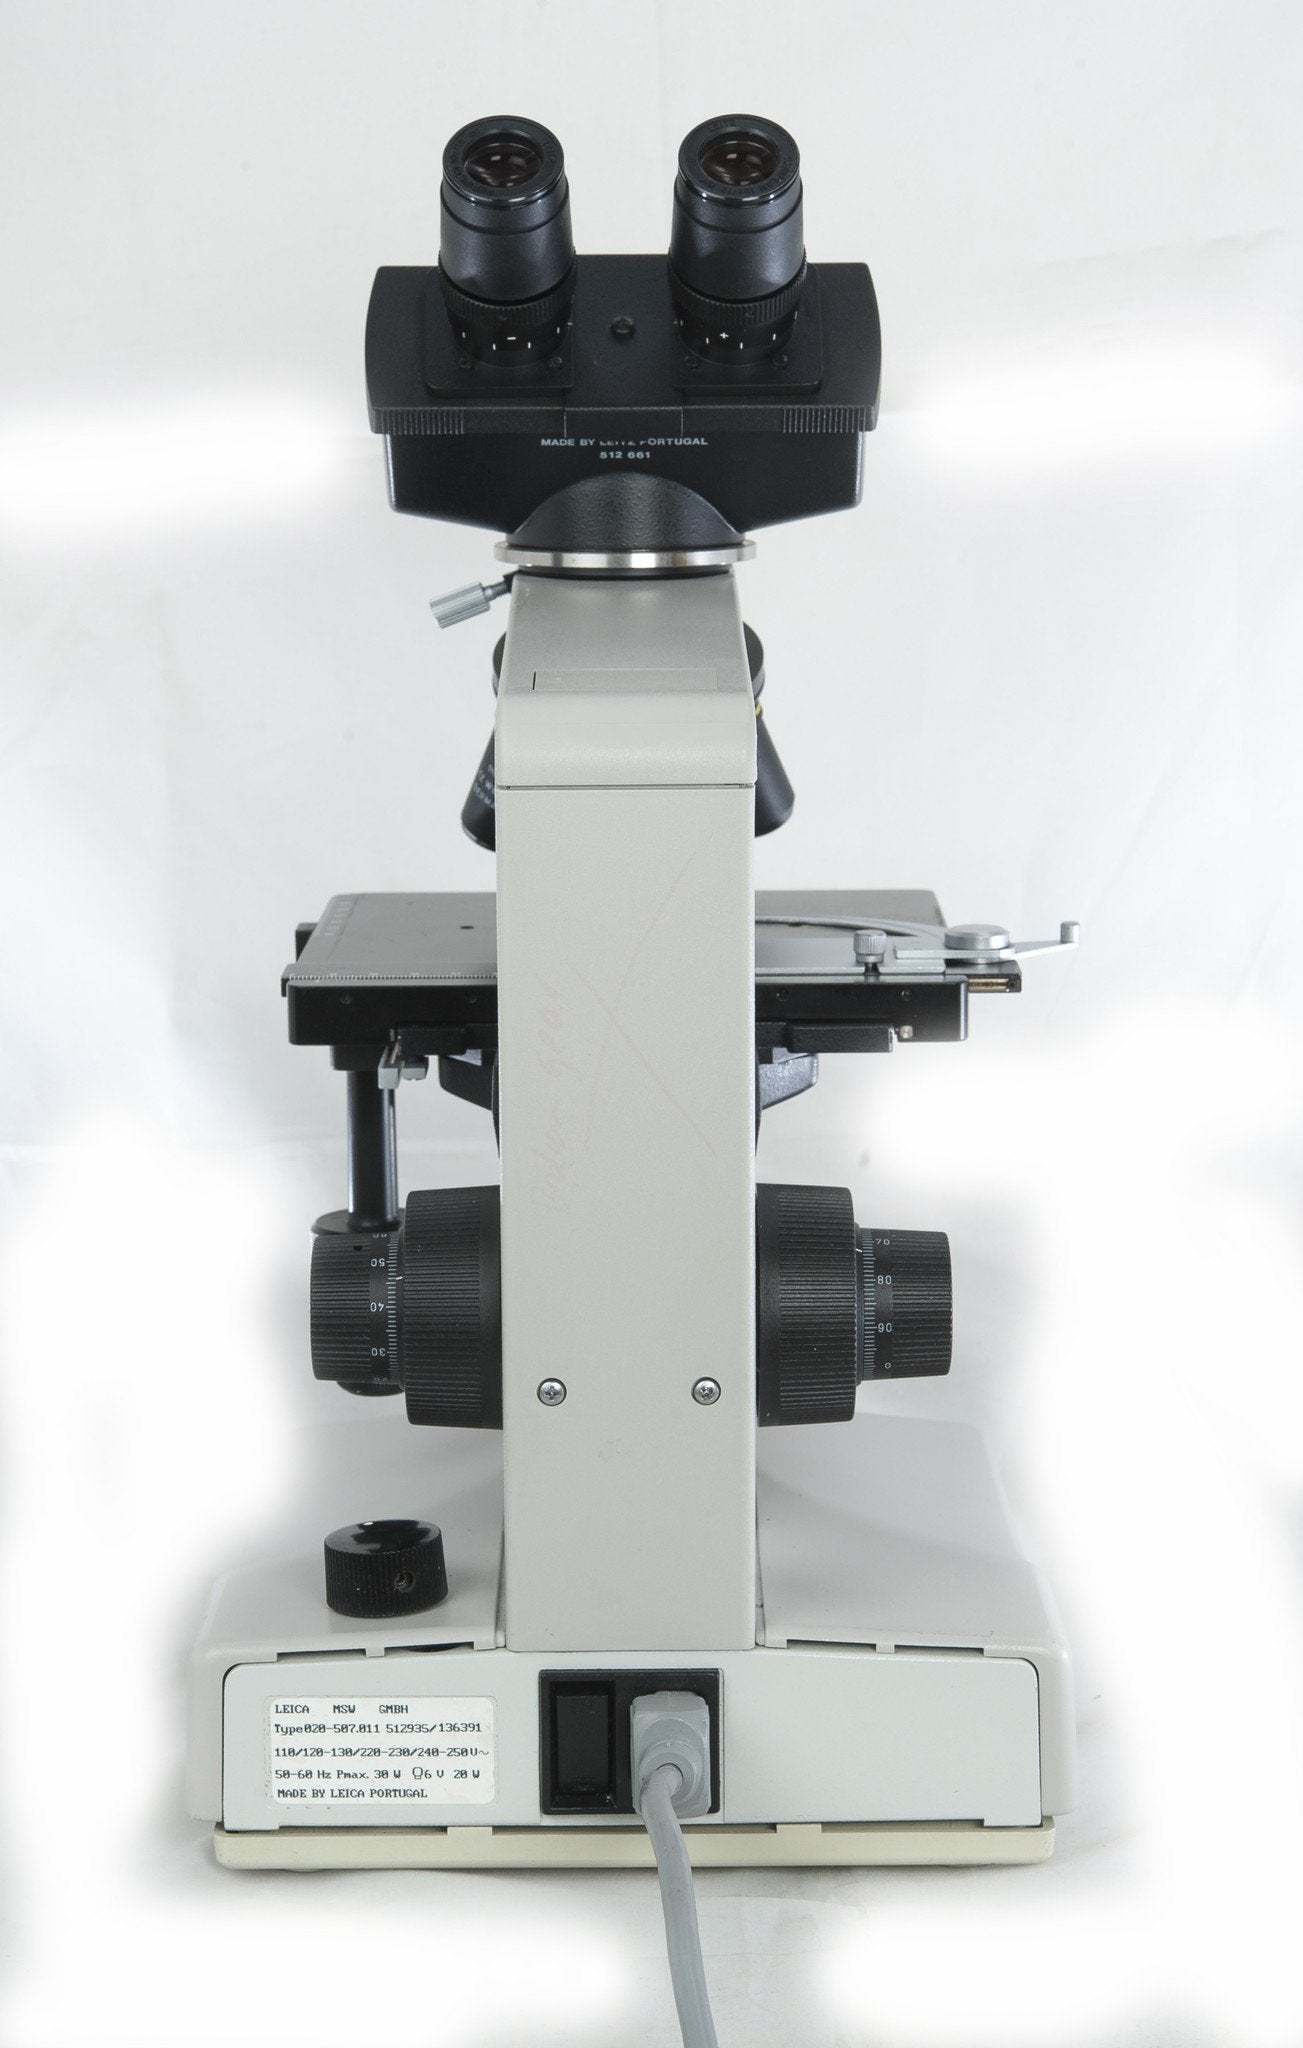 Leitz Microlab Binocular Microscope - Microscope Central
 - 4